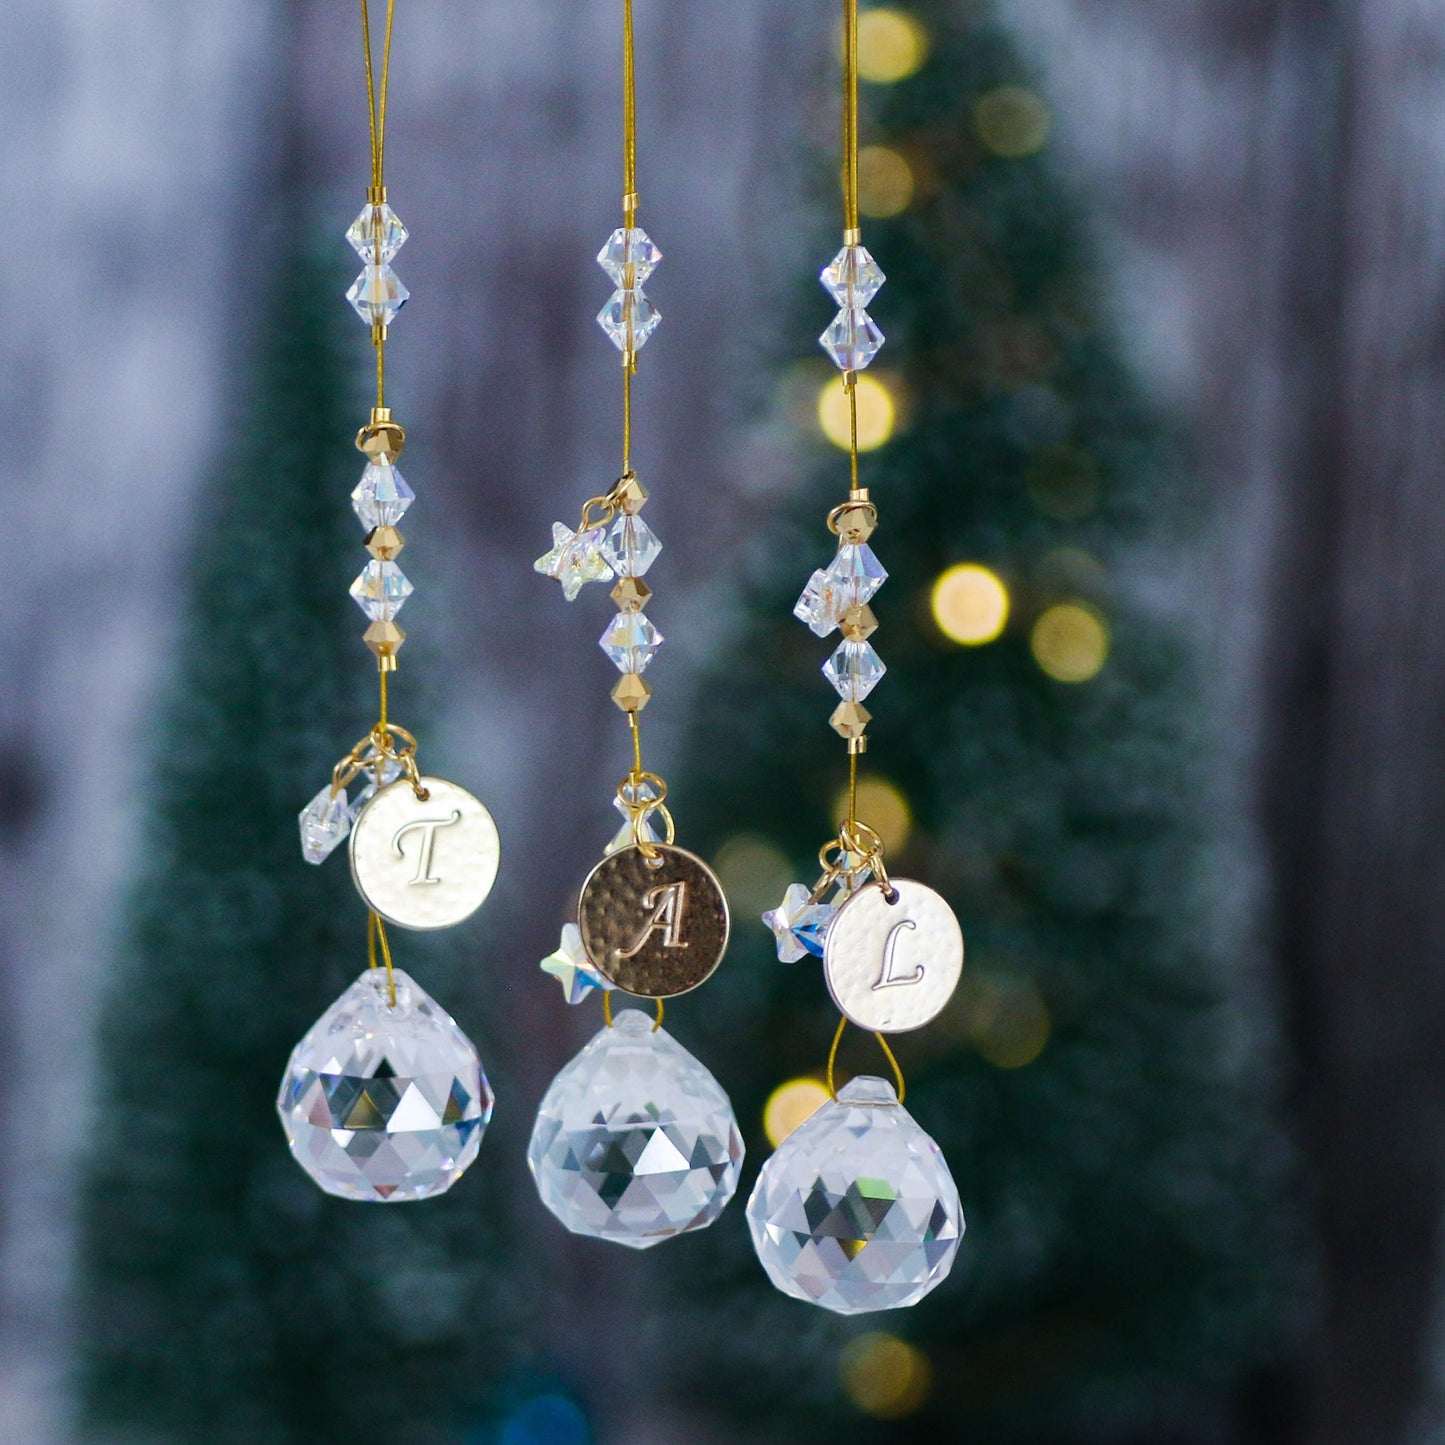 Crystal Suncatcher, Crystal Christmas Tree Decoration